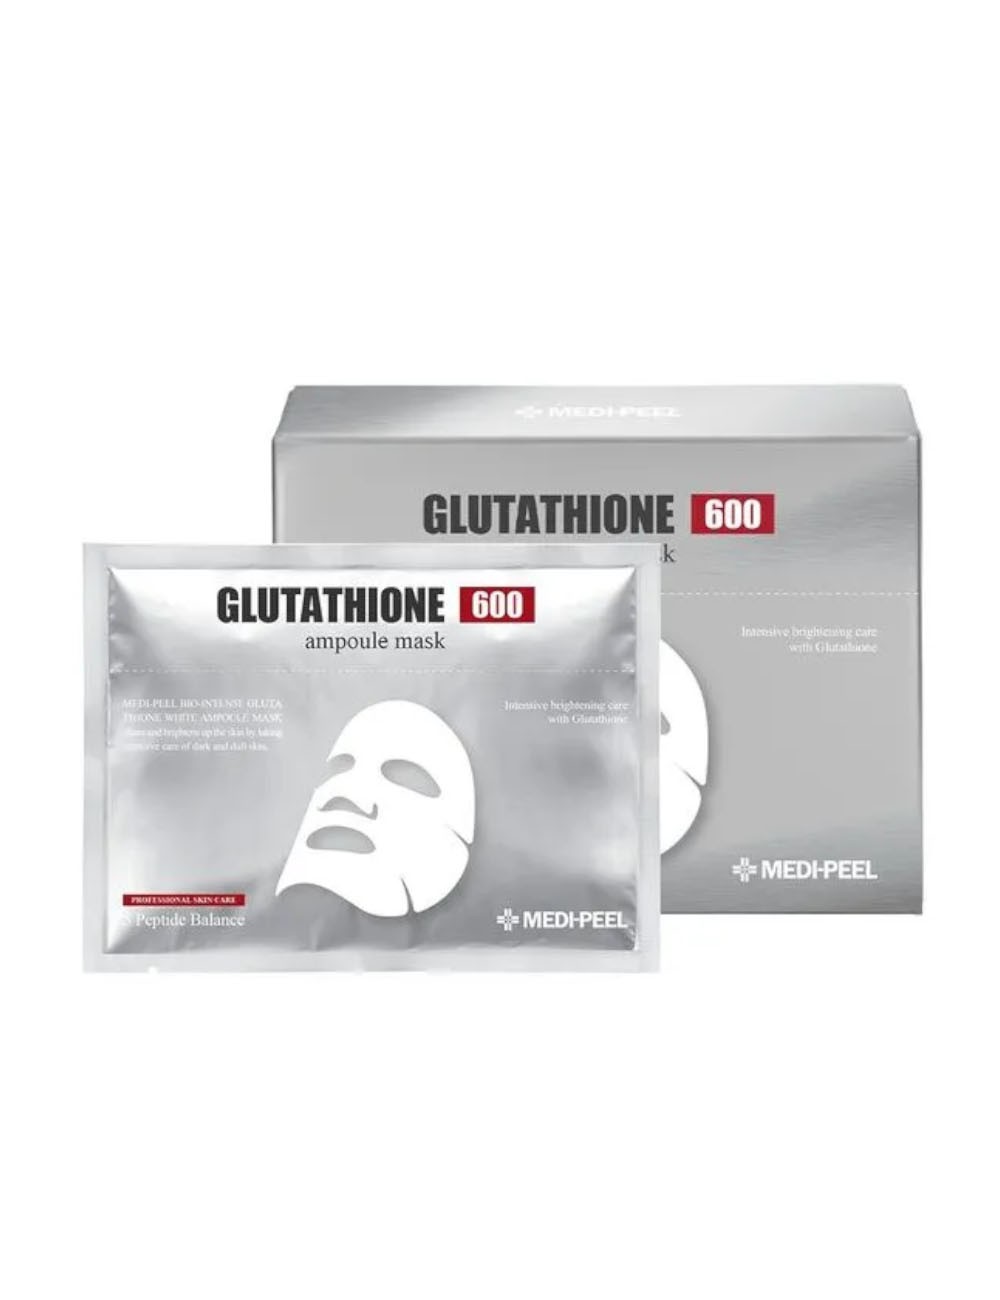 MEDI-PEEL Glutathione 600 Ampoule Mask